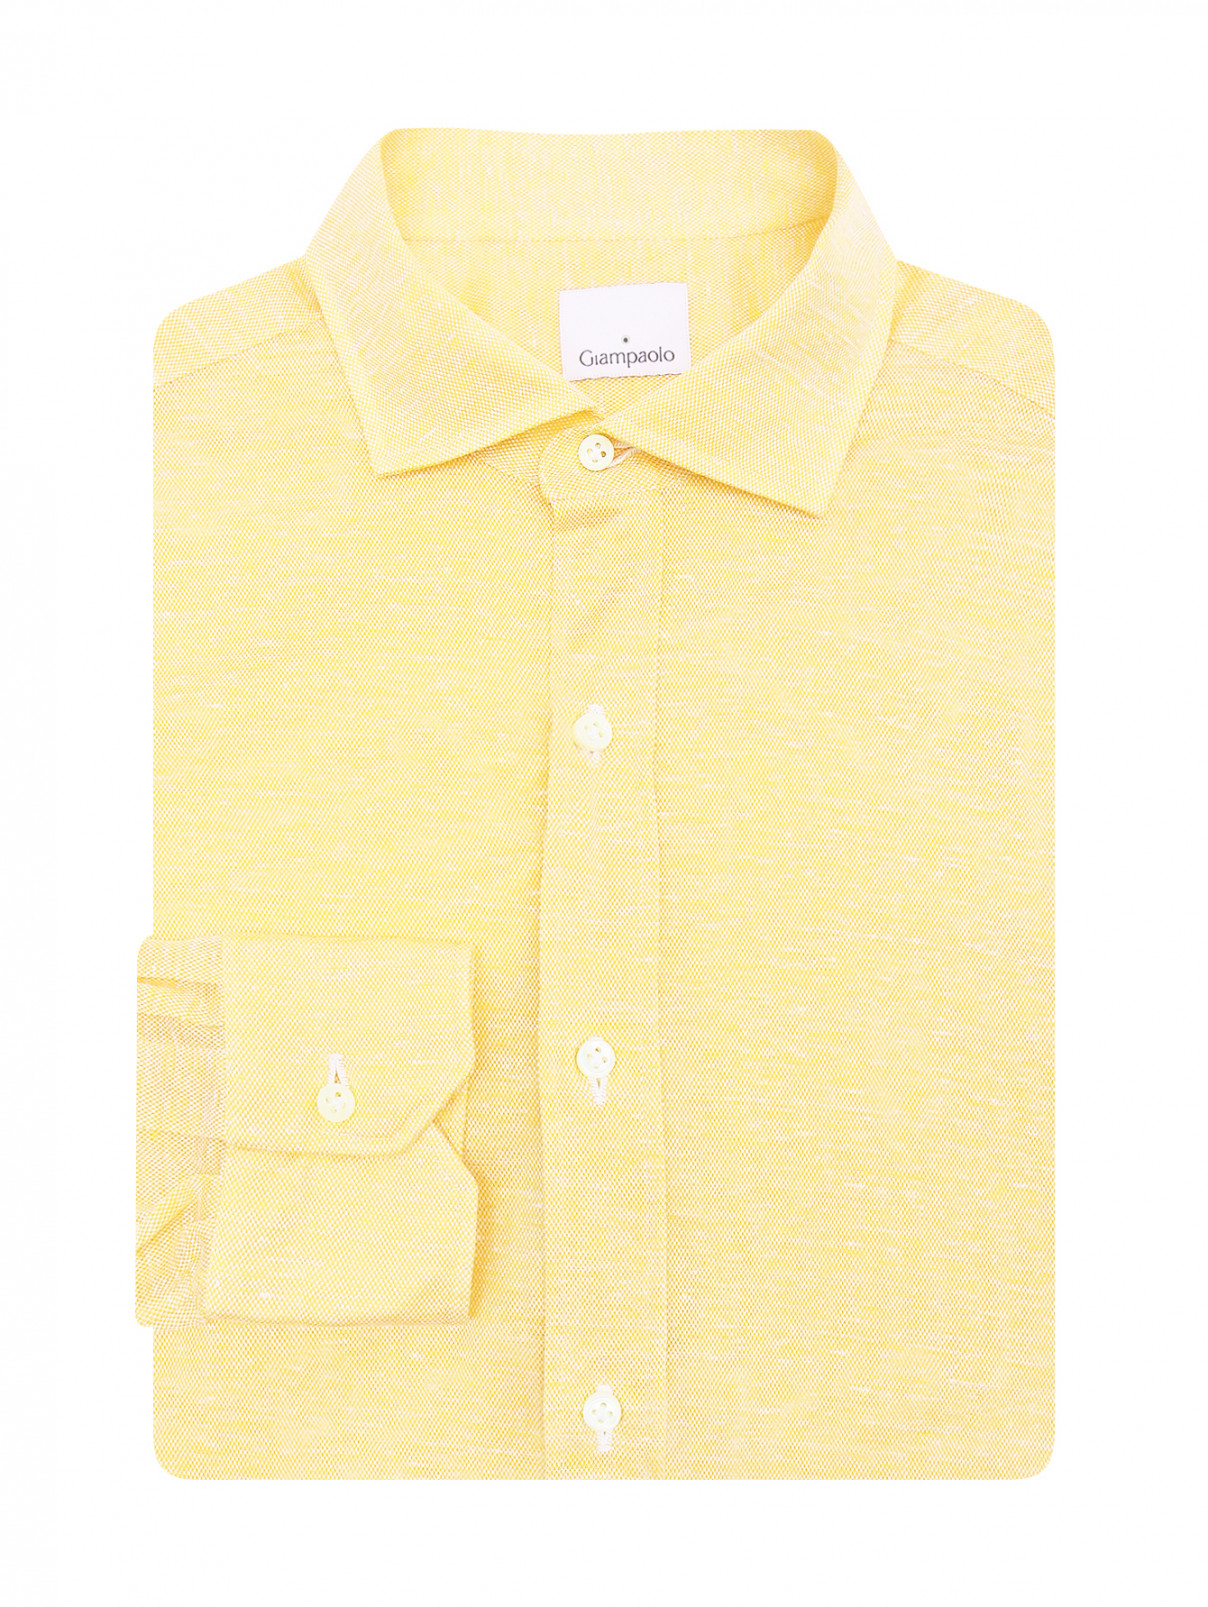 Рубашка из хлопка с узором Giampaolo  –  Общий вид  – Цвет:  Желтый